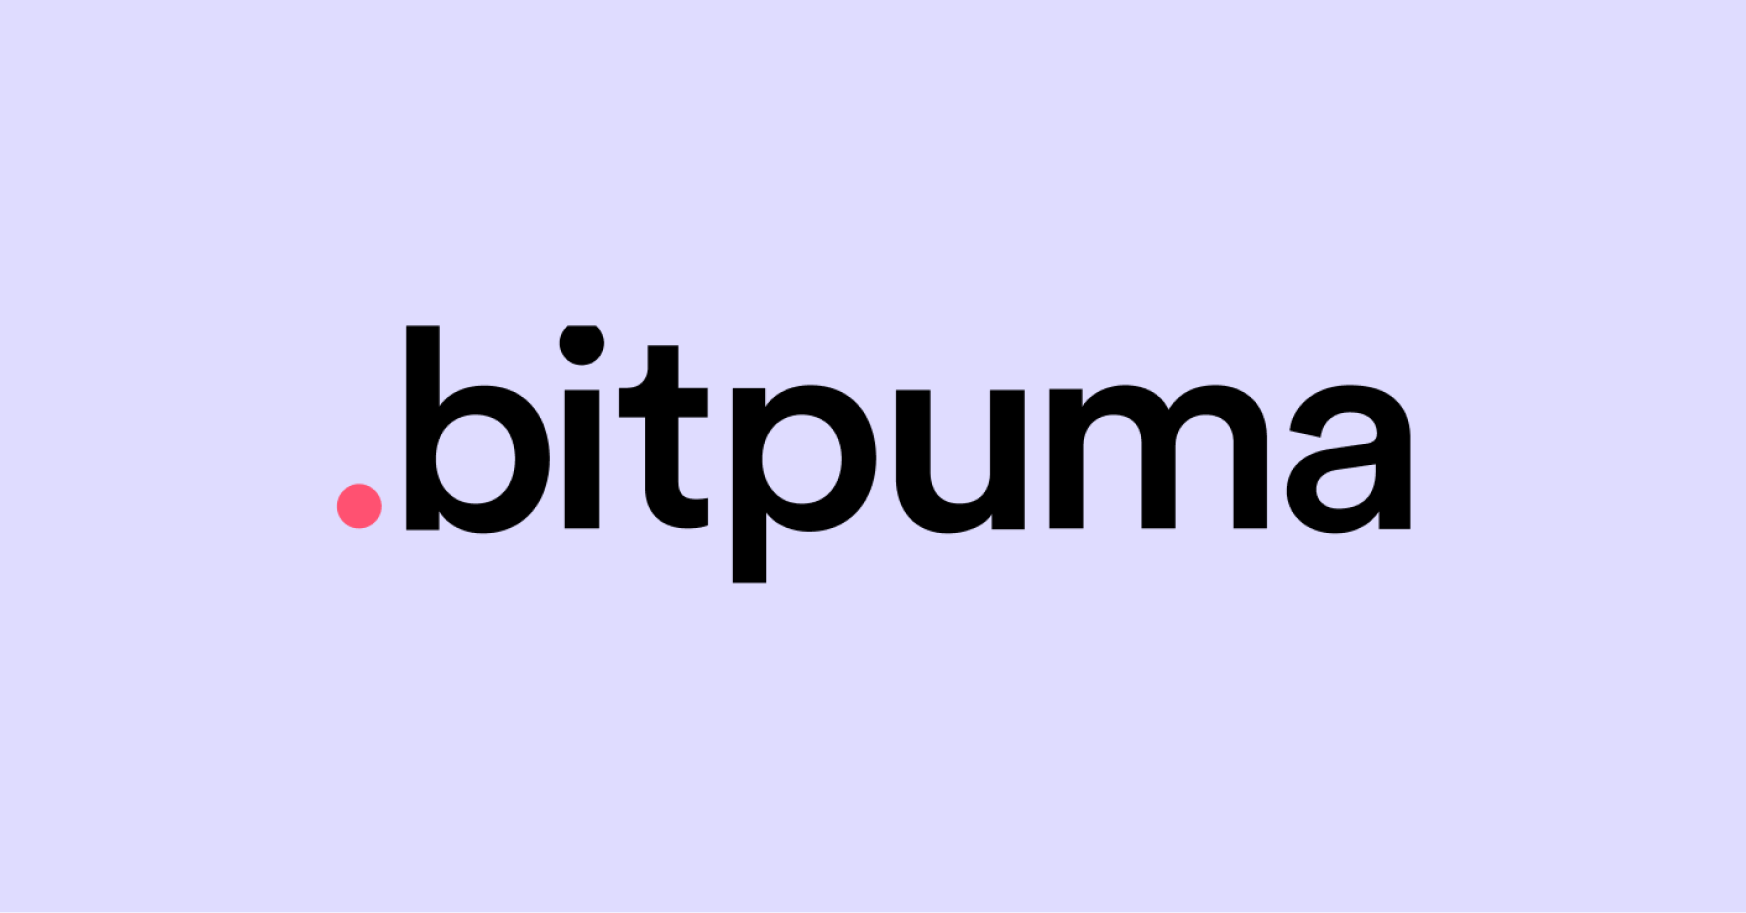 Agency Bitpuma logo with background